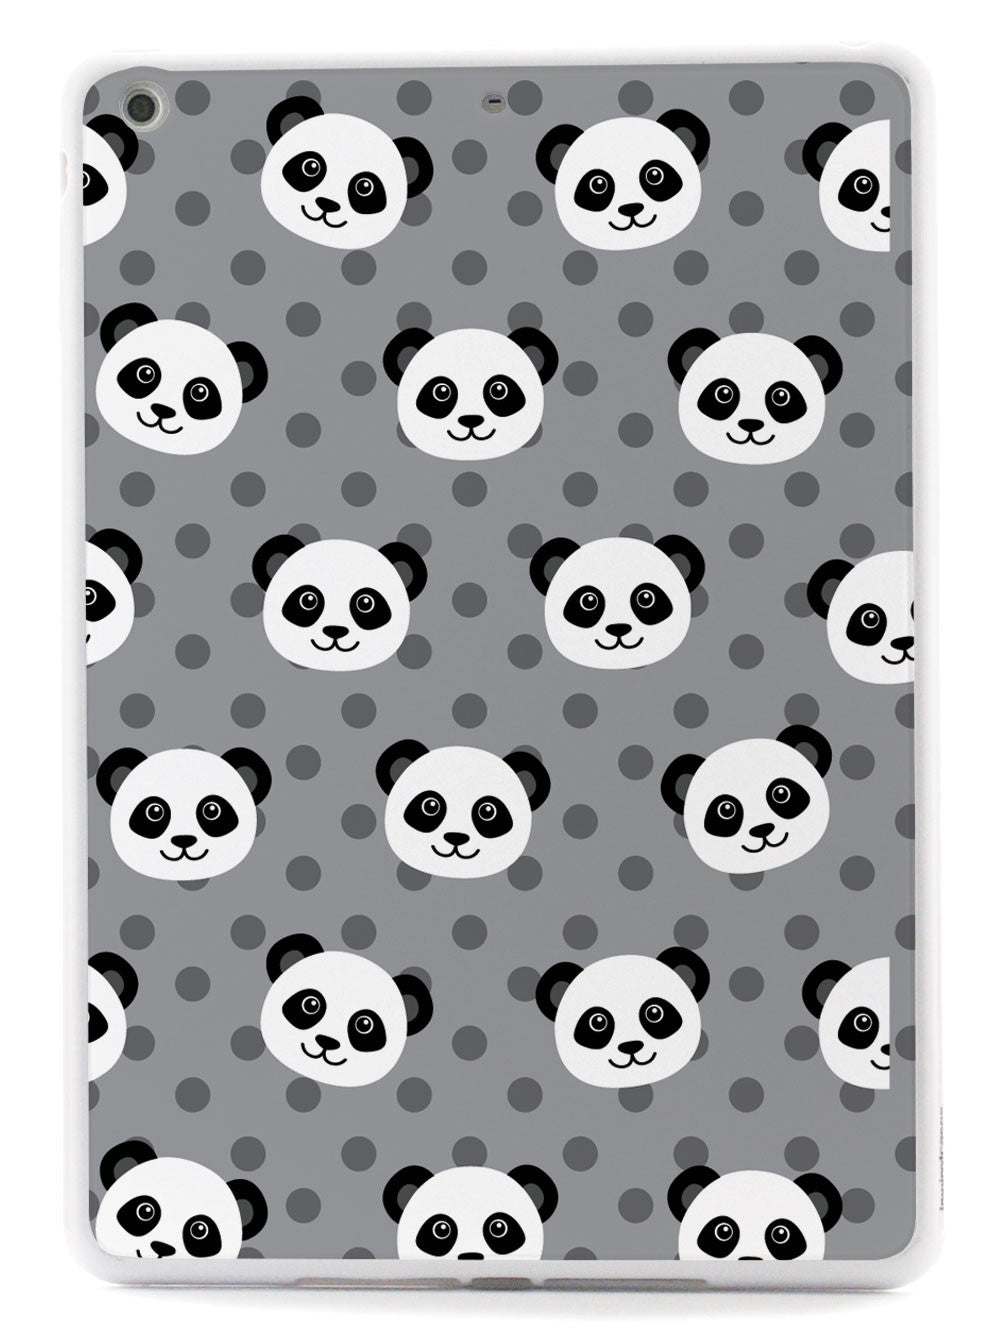 Cute Panda Pattern - Gray Polka Dots Case